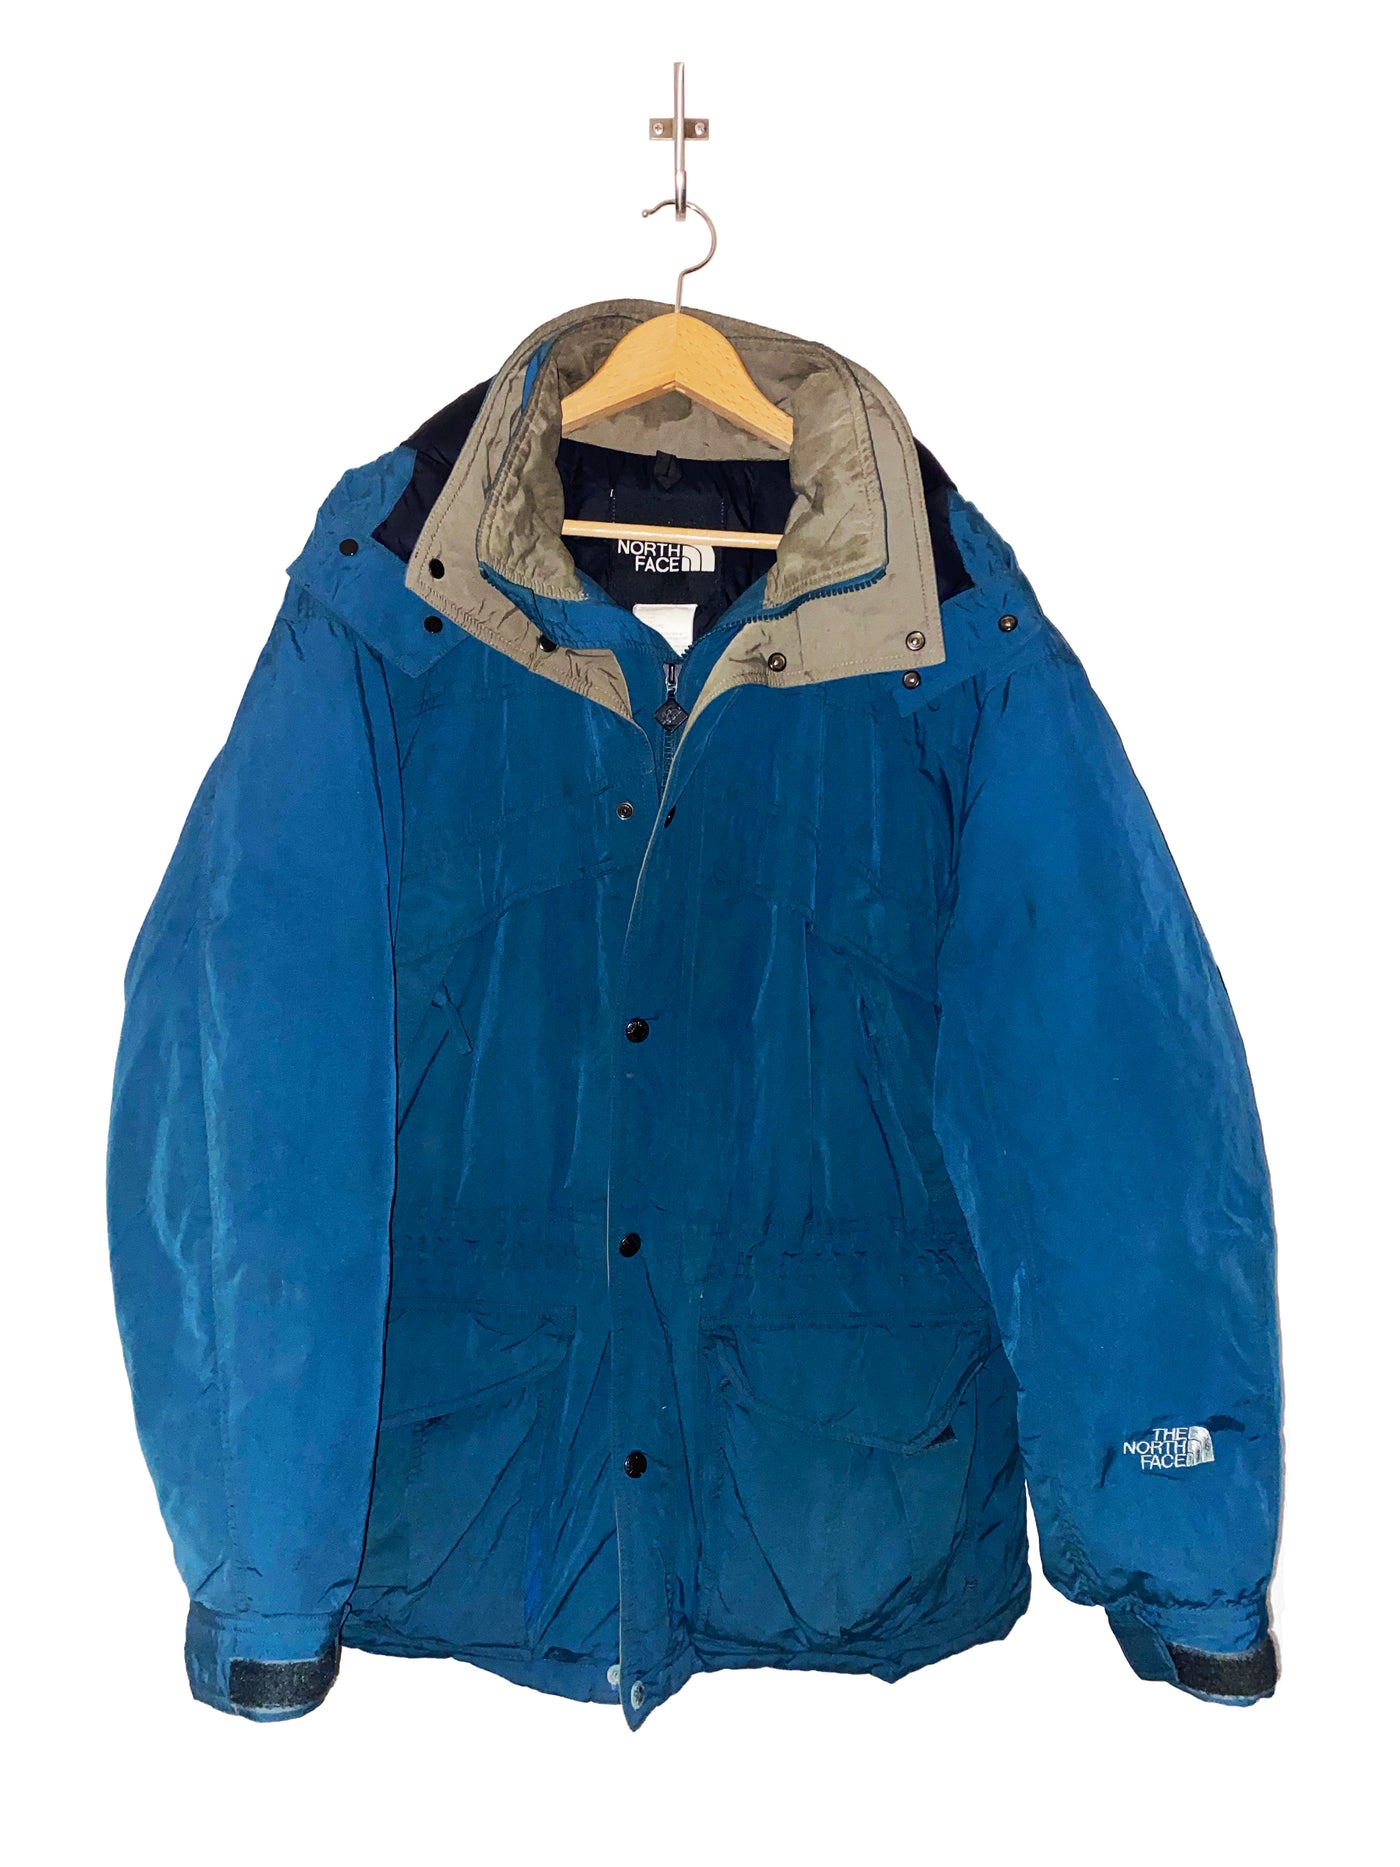 Vintage North Face Cargo Style Jacket